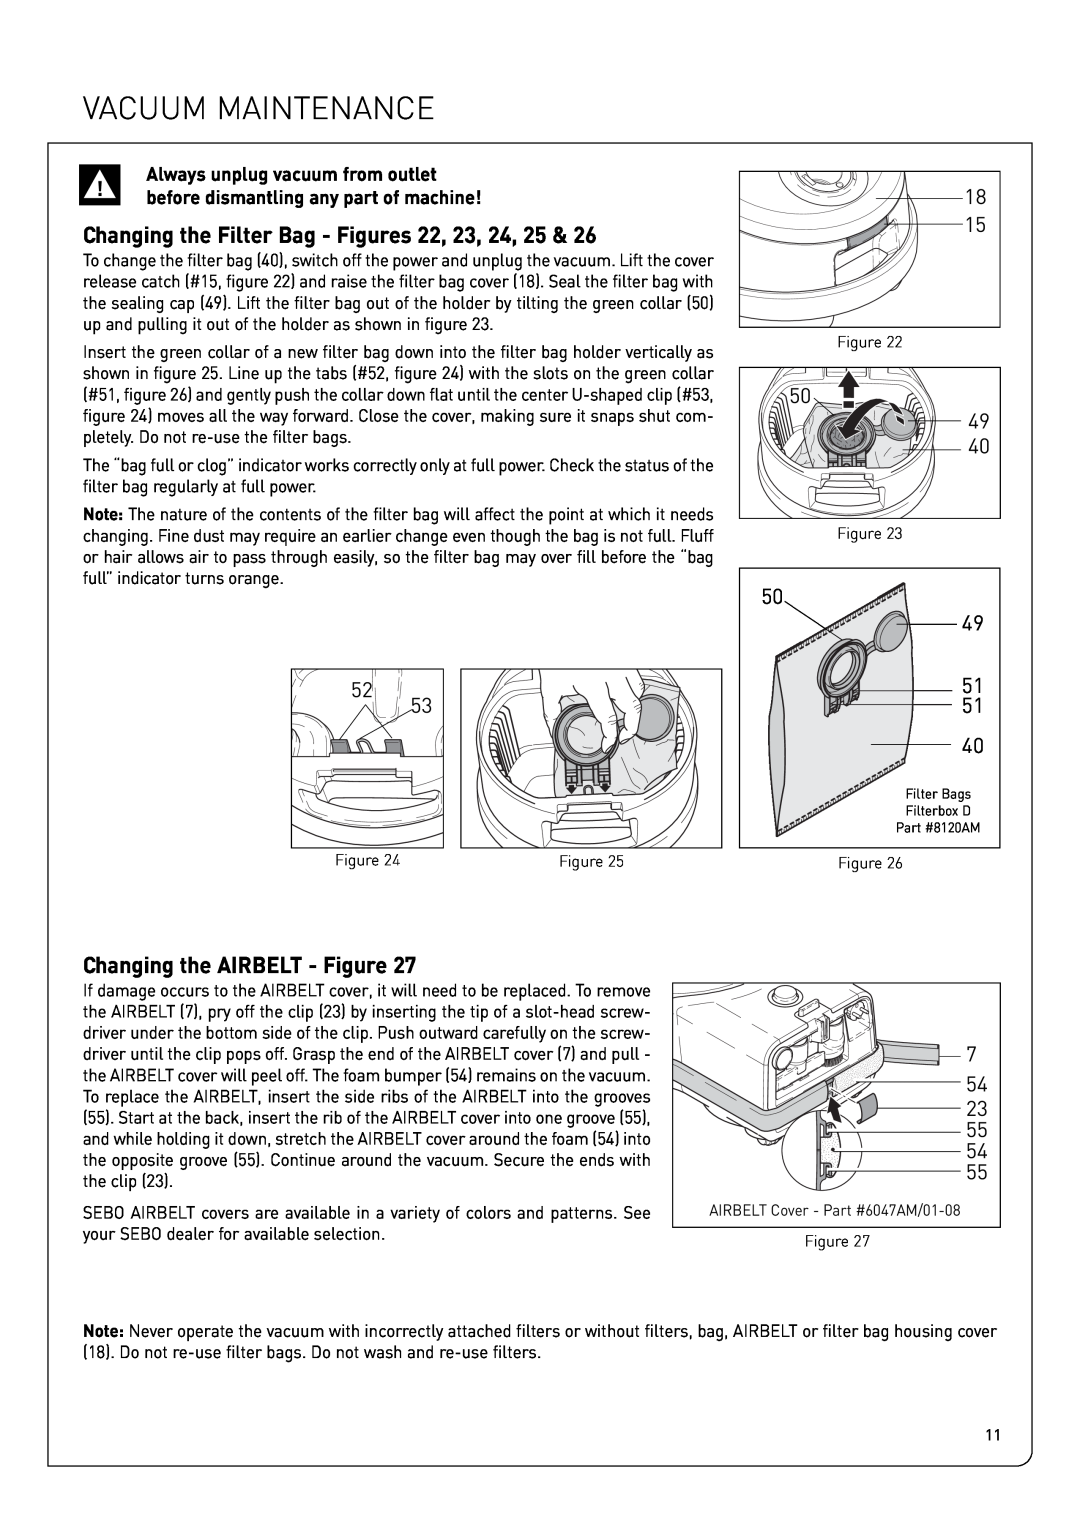 Sebo Airbelt D owner manual Vacuum Maintenance, Changing the AIRBELT - Figure 